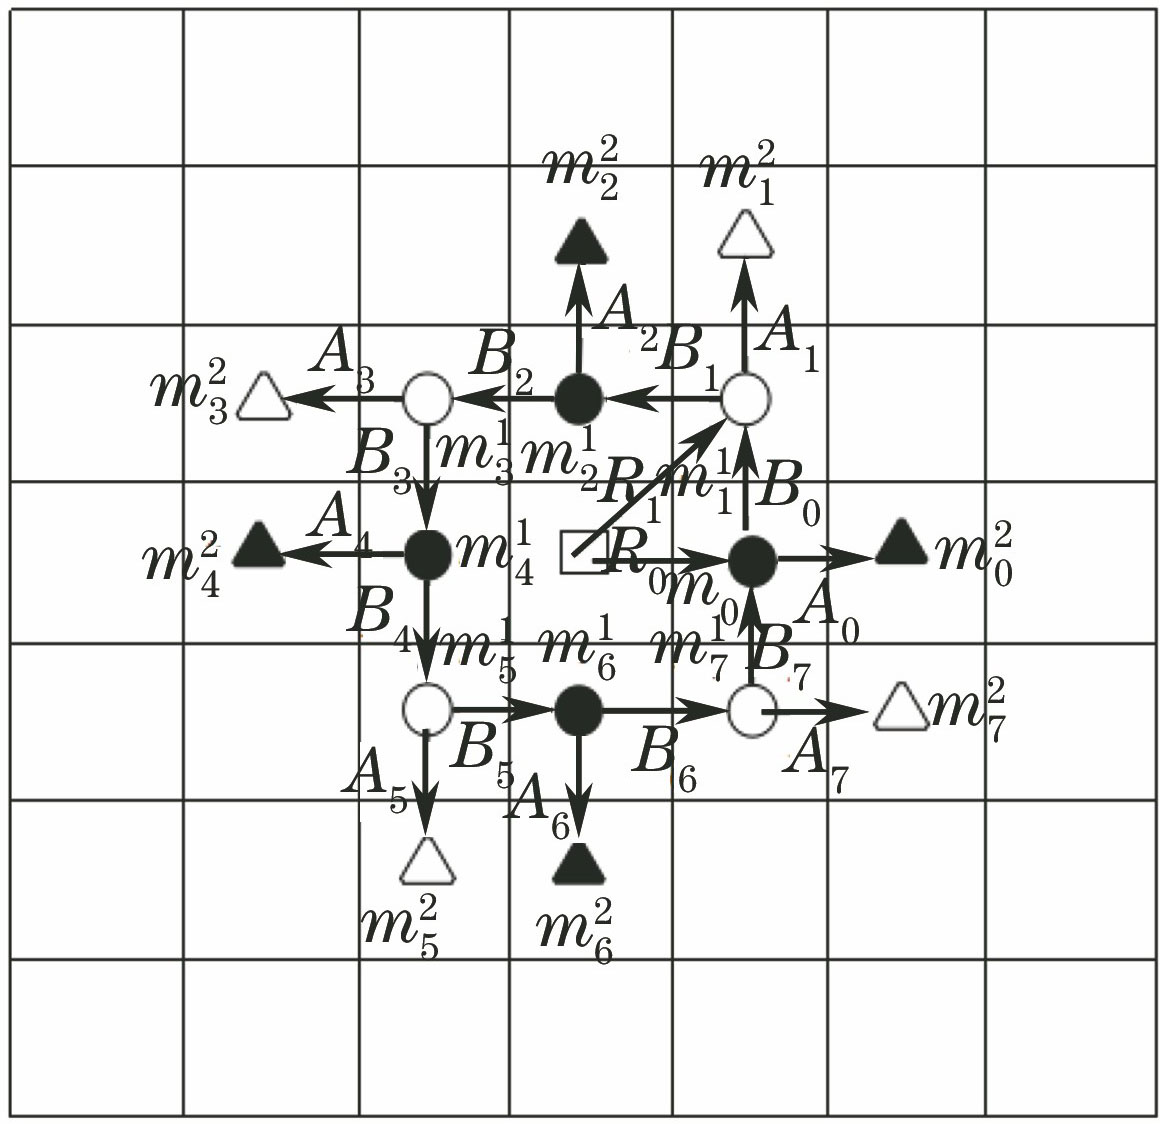 Principle diagram of OGDLDP algorithm